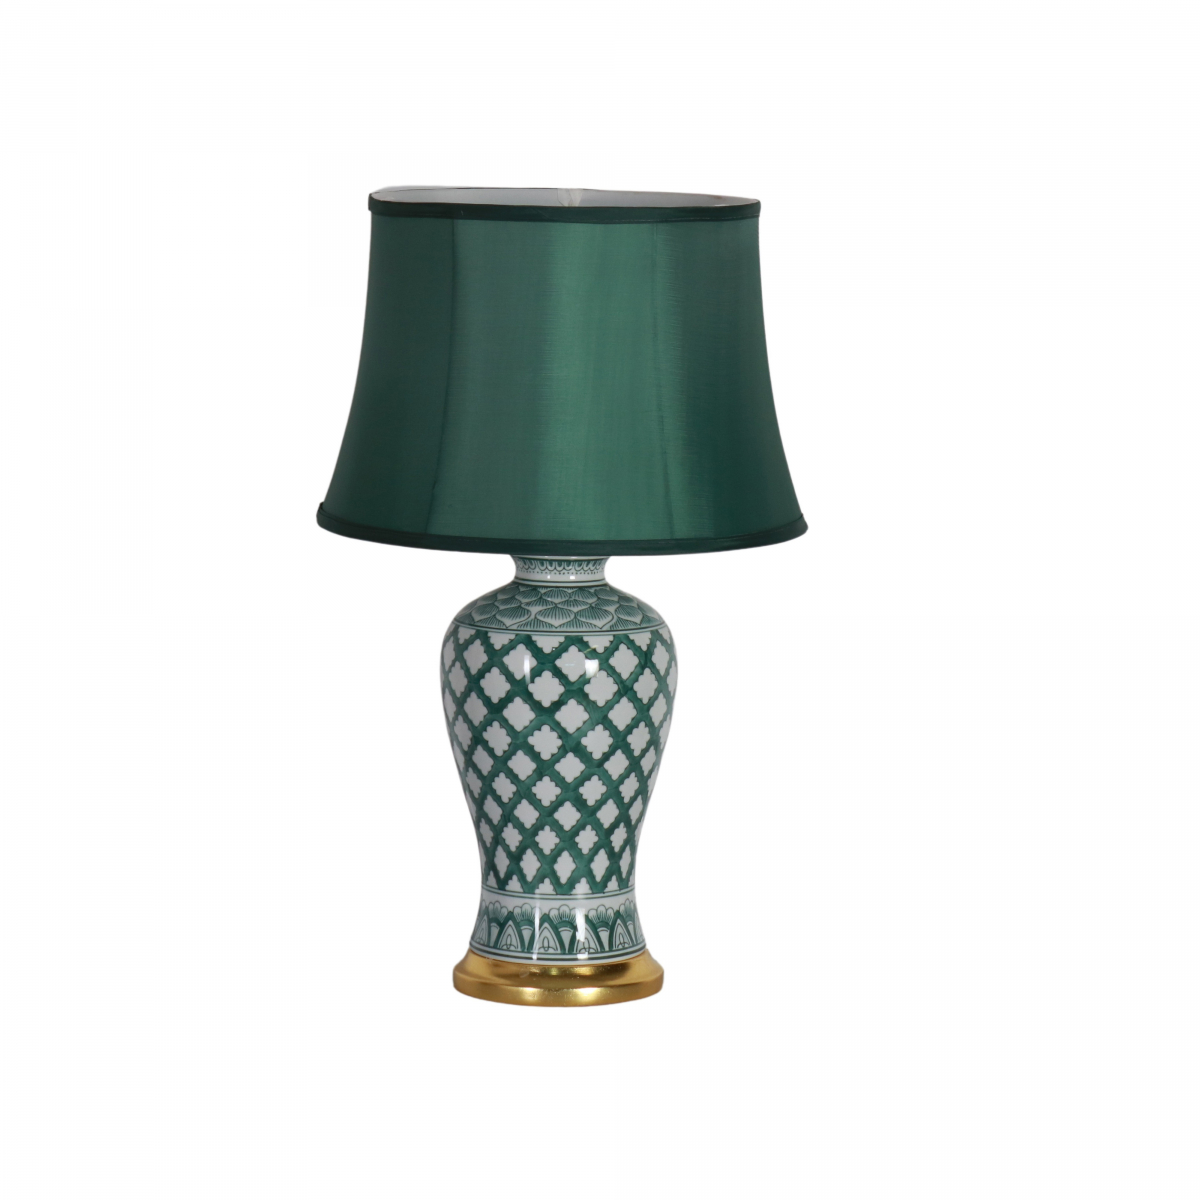 Green lattice ceramic lamp base with green shade